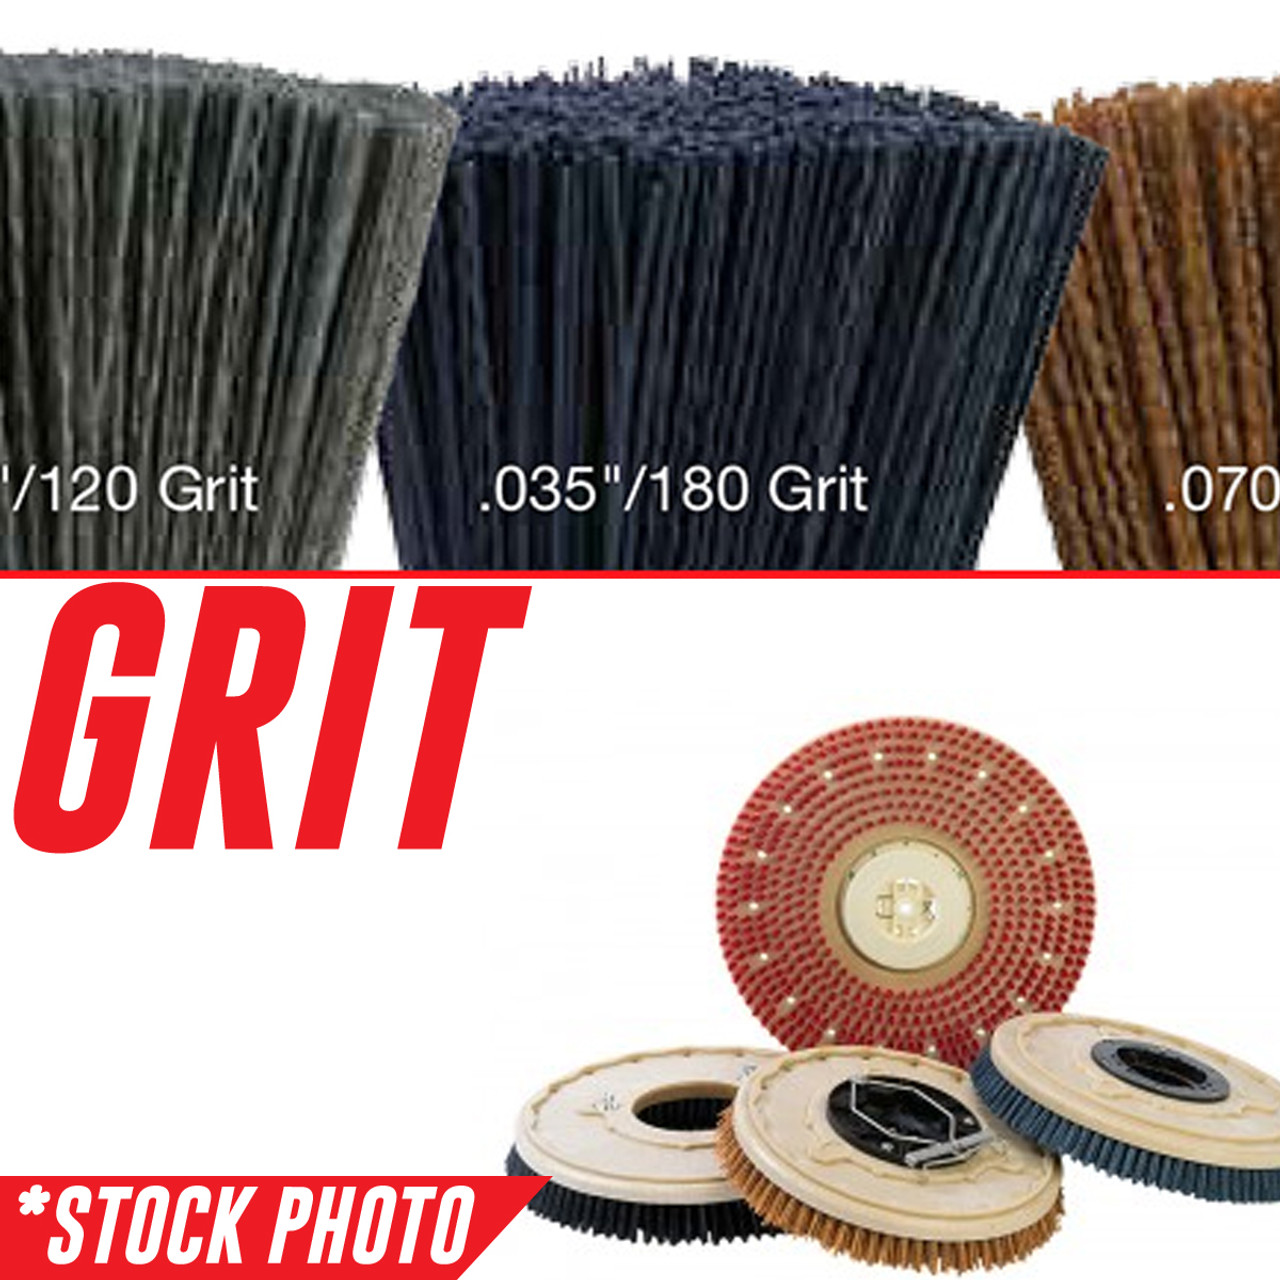 19" Rotary Brush .070"/46 Grit fits International Cleaning Equipment Models i20